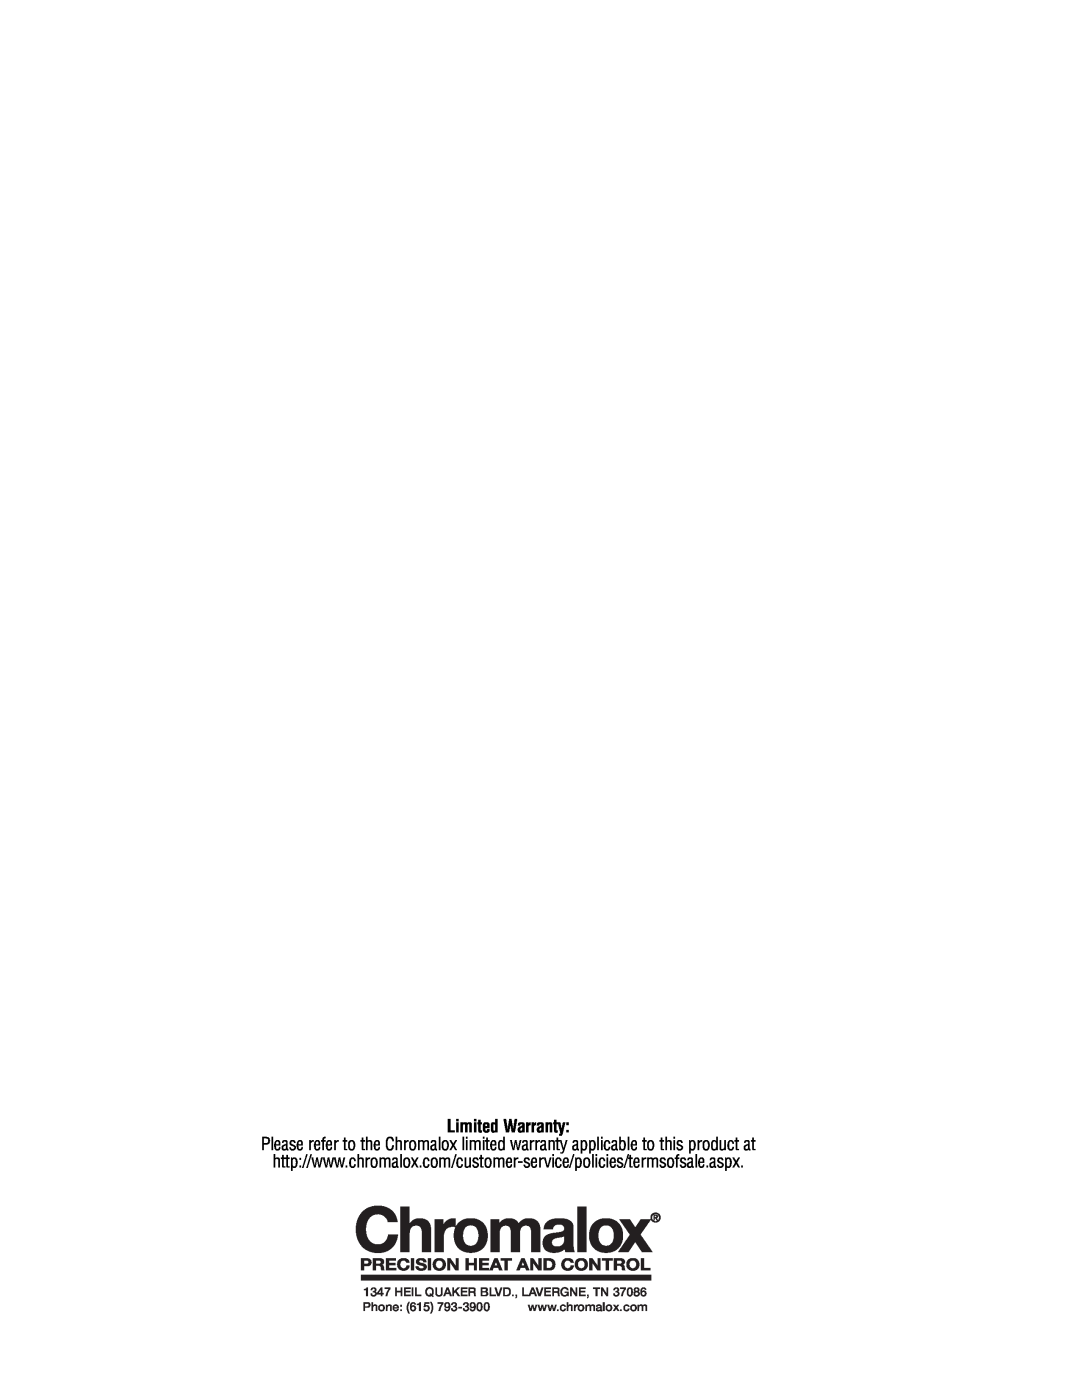 Chromalox PK413-4 specifications Limited Warranty, Heil Quaker Blvd., Lavergne, Tn, Phone 615 